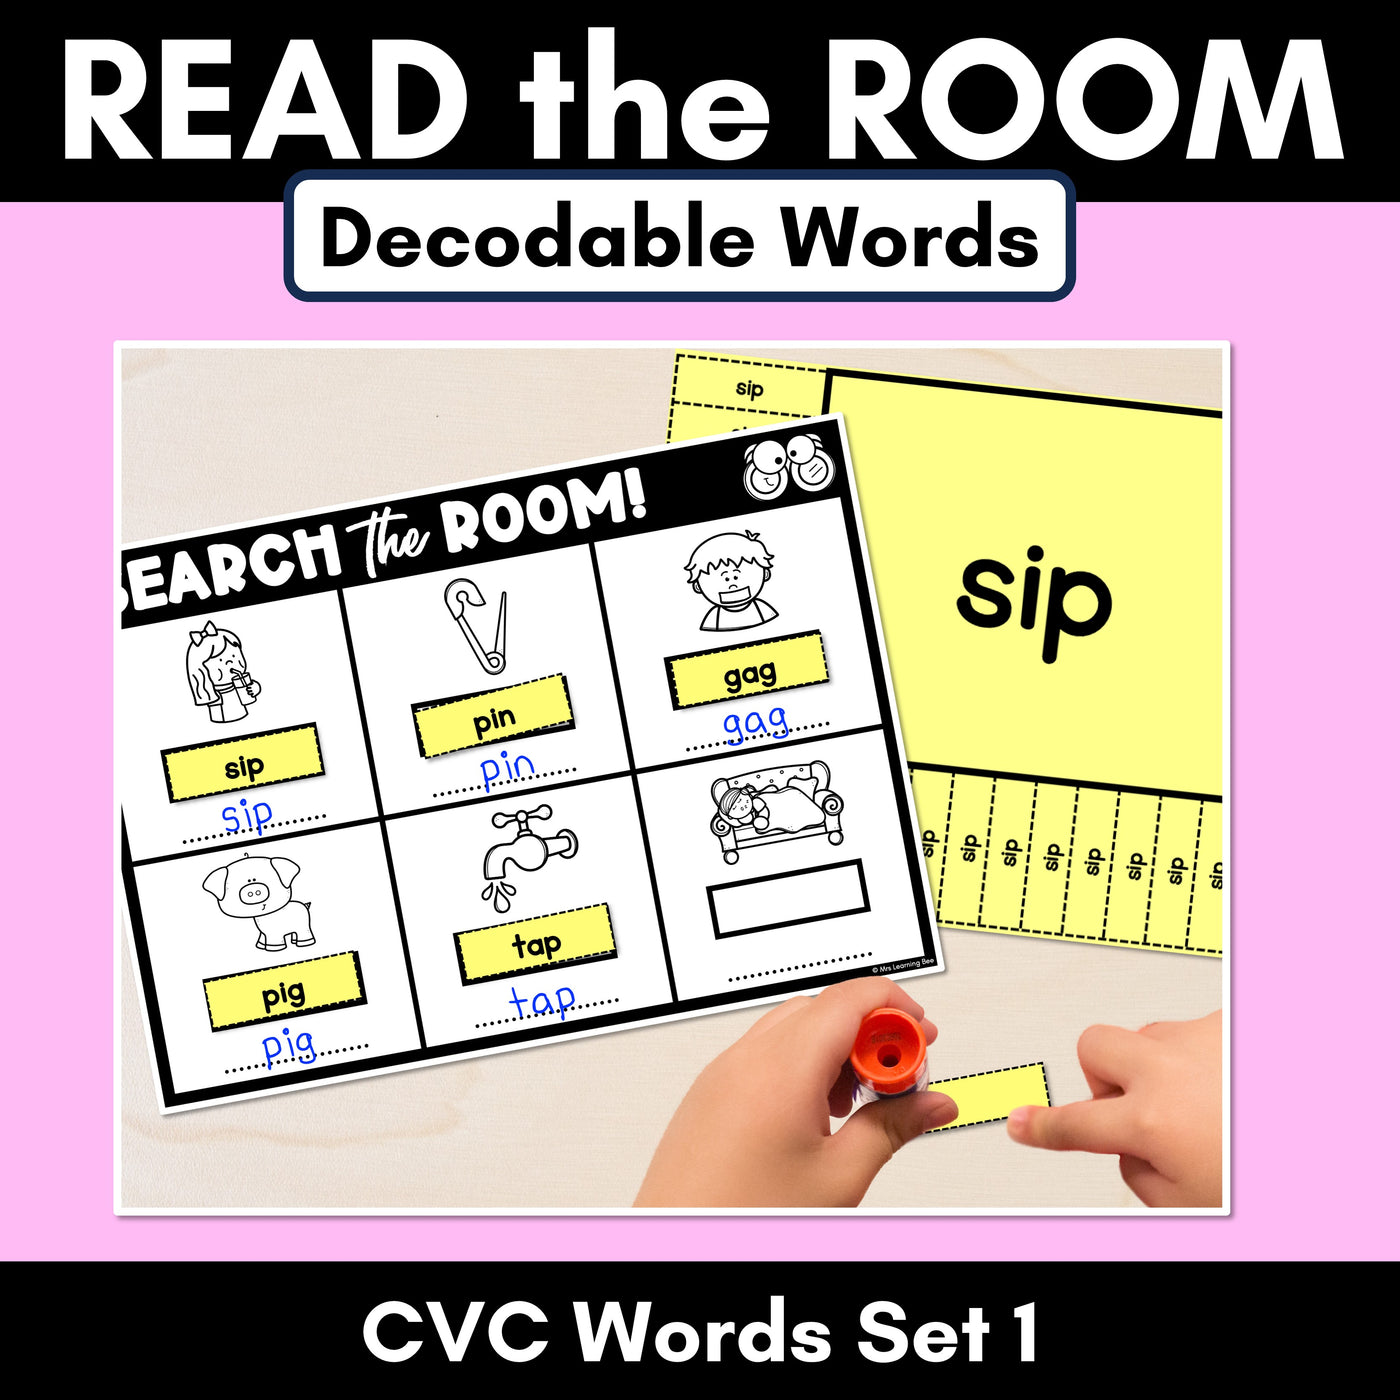 READ THE ROOM - Decodable Words Phonics Activity - CVC Words Set 1